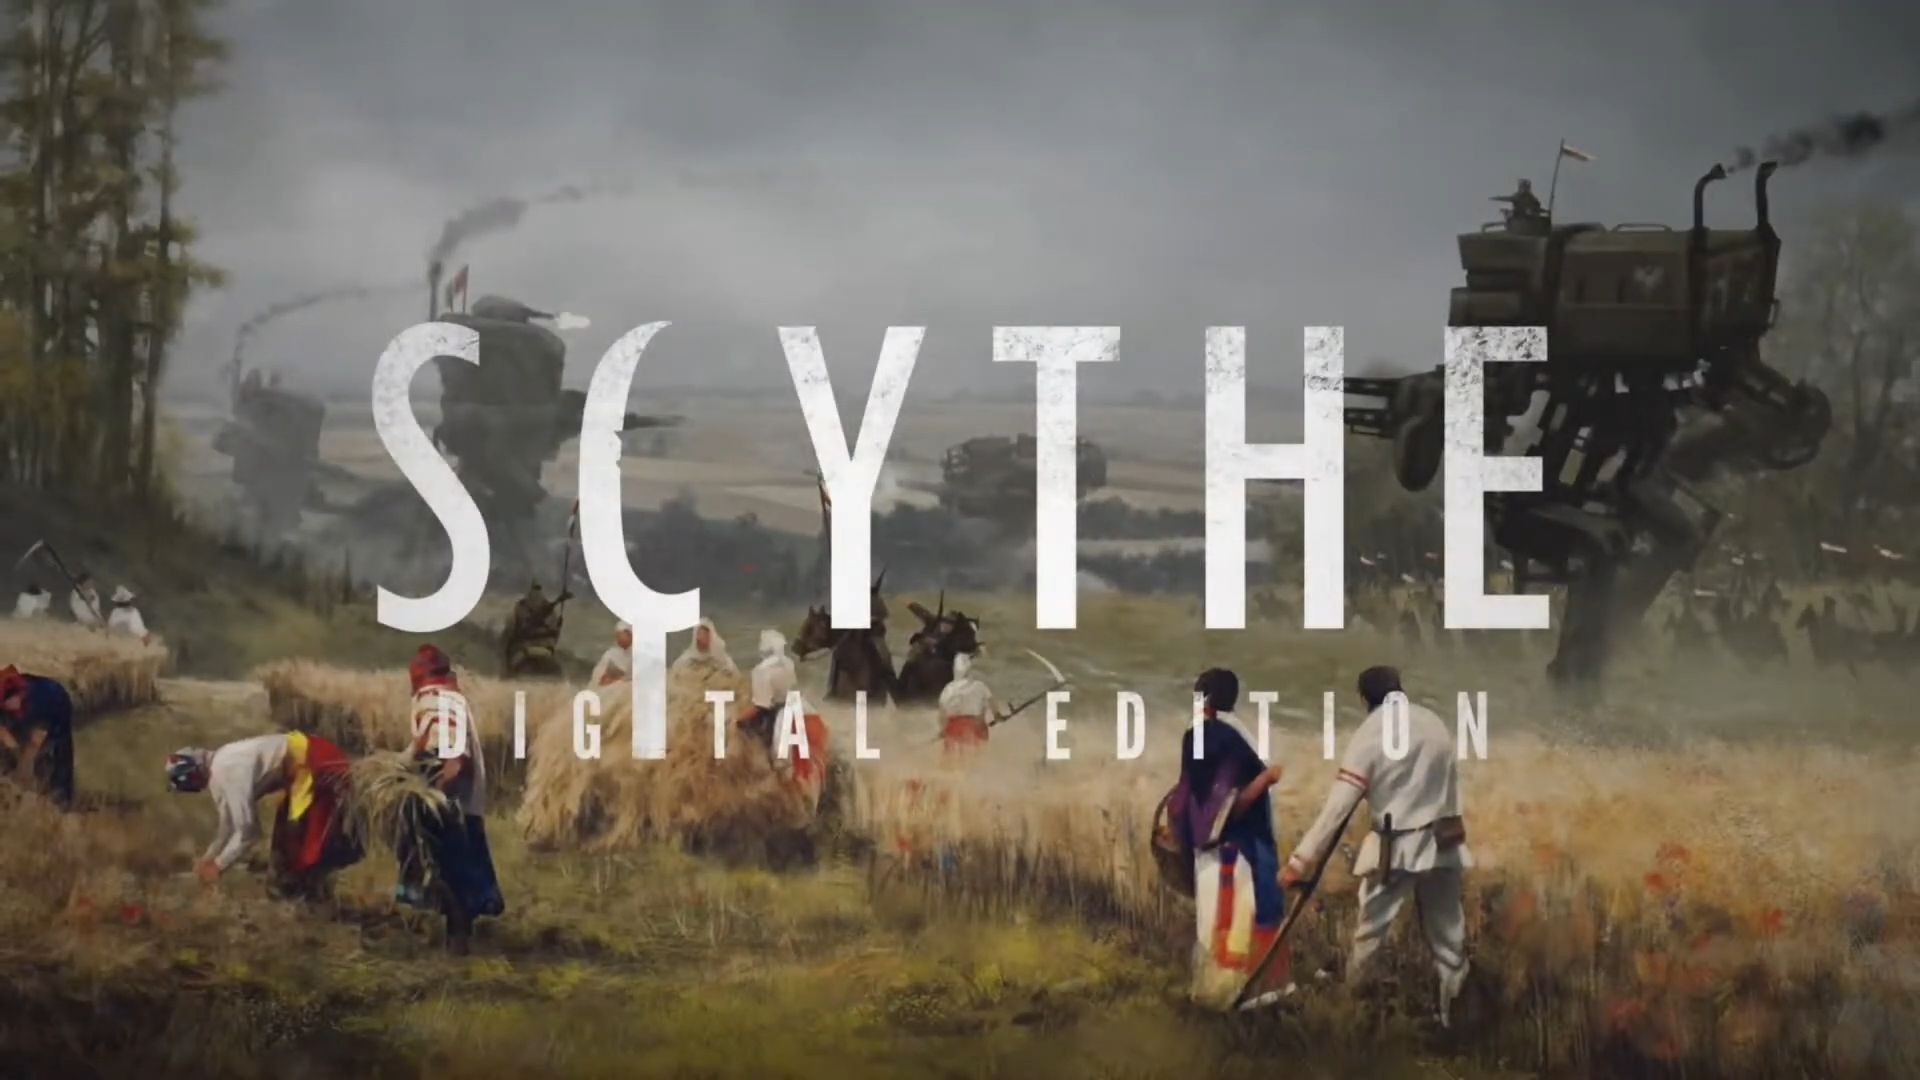 Scythe: Digital Edition スクリーンショット1